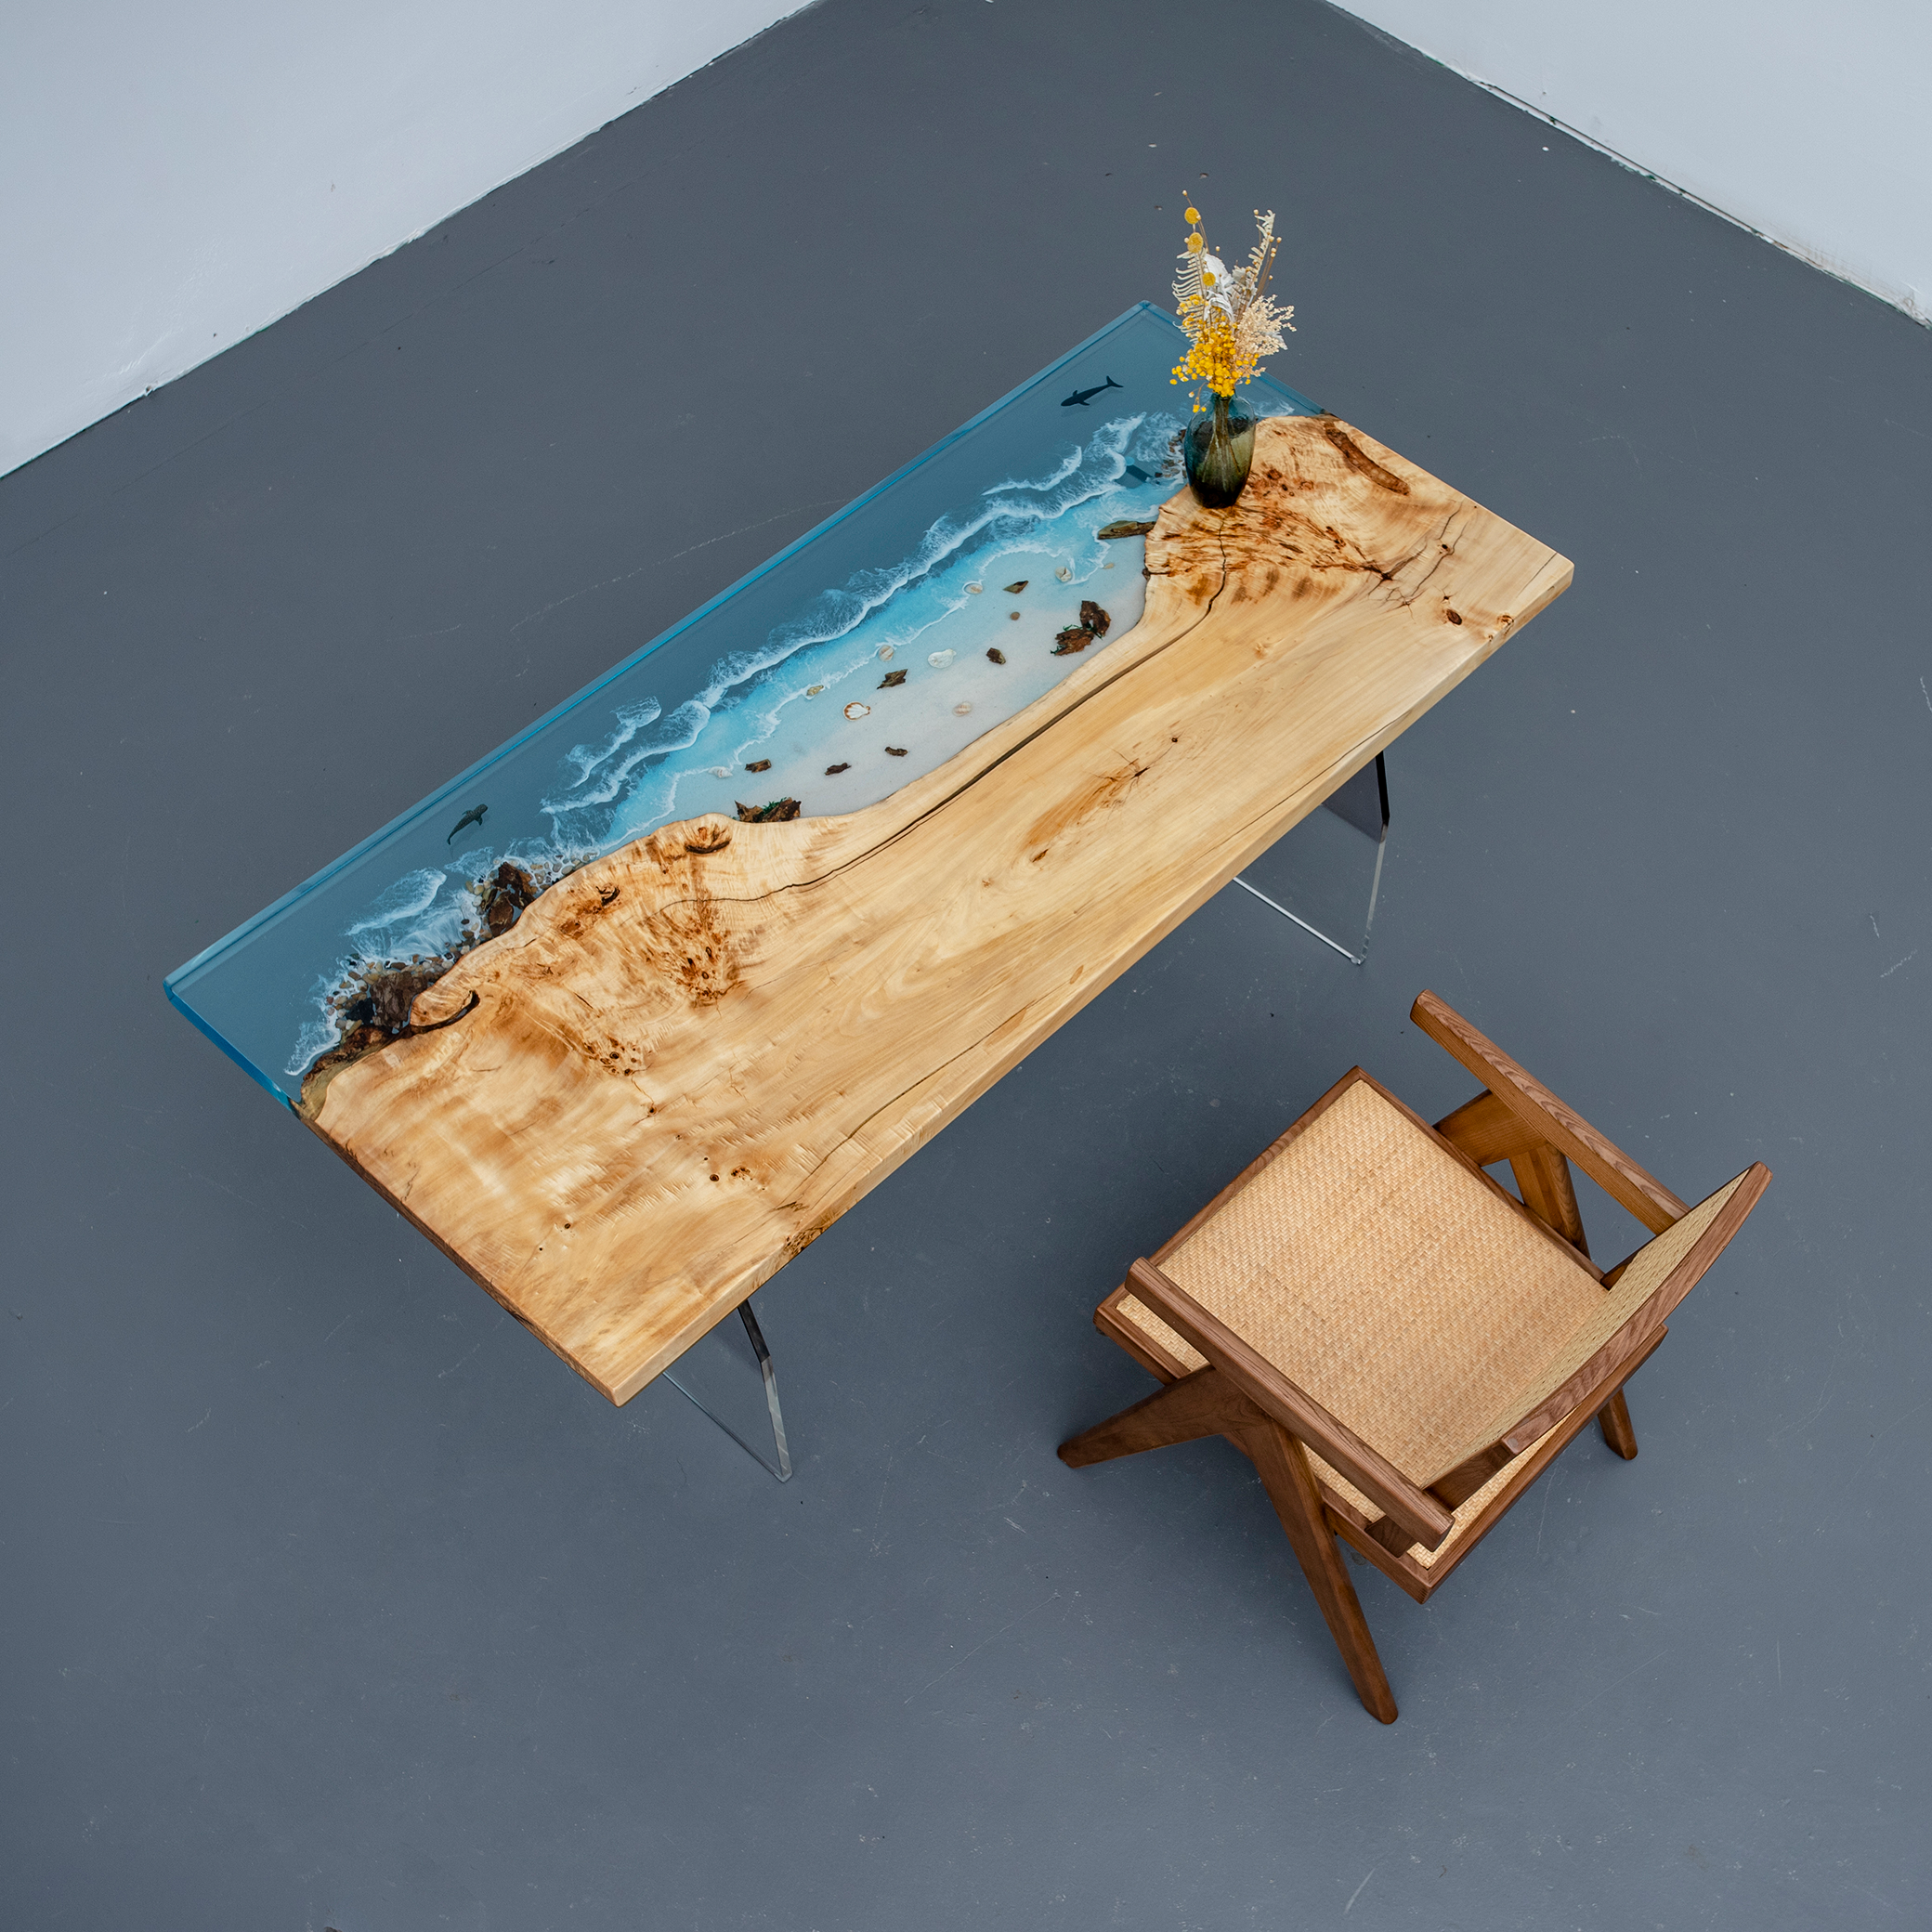 Ocean Epoxy Resin Wood Table, Epoxy Resine Table